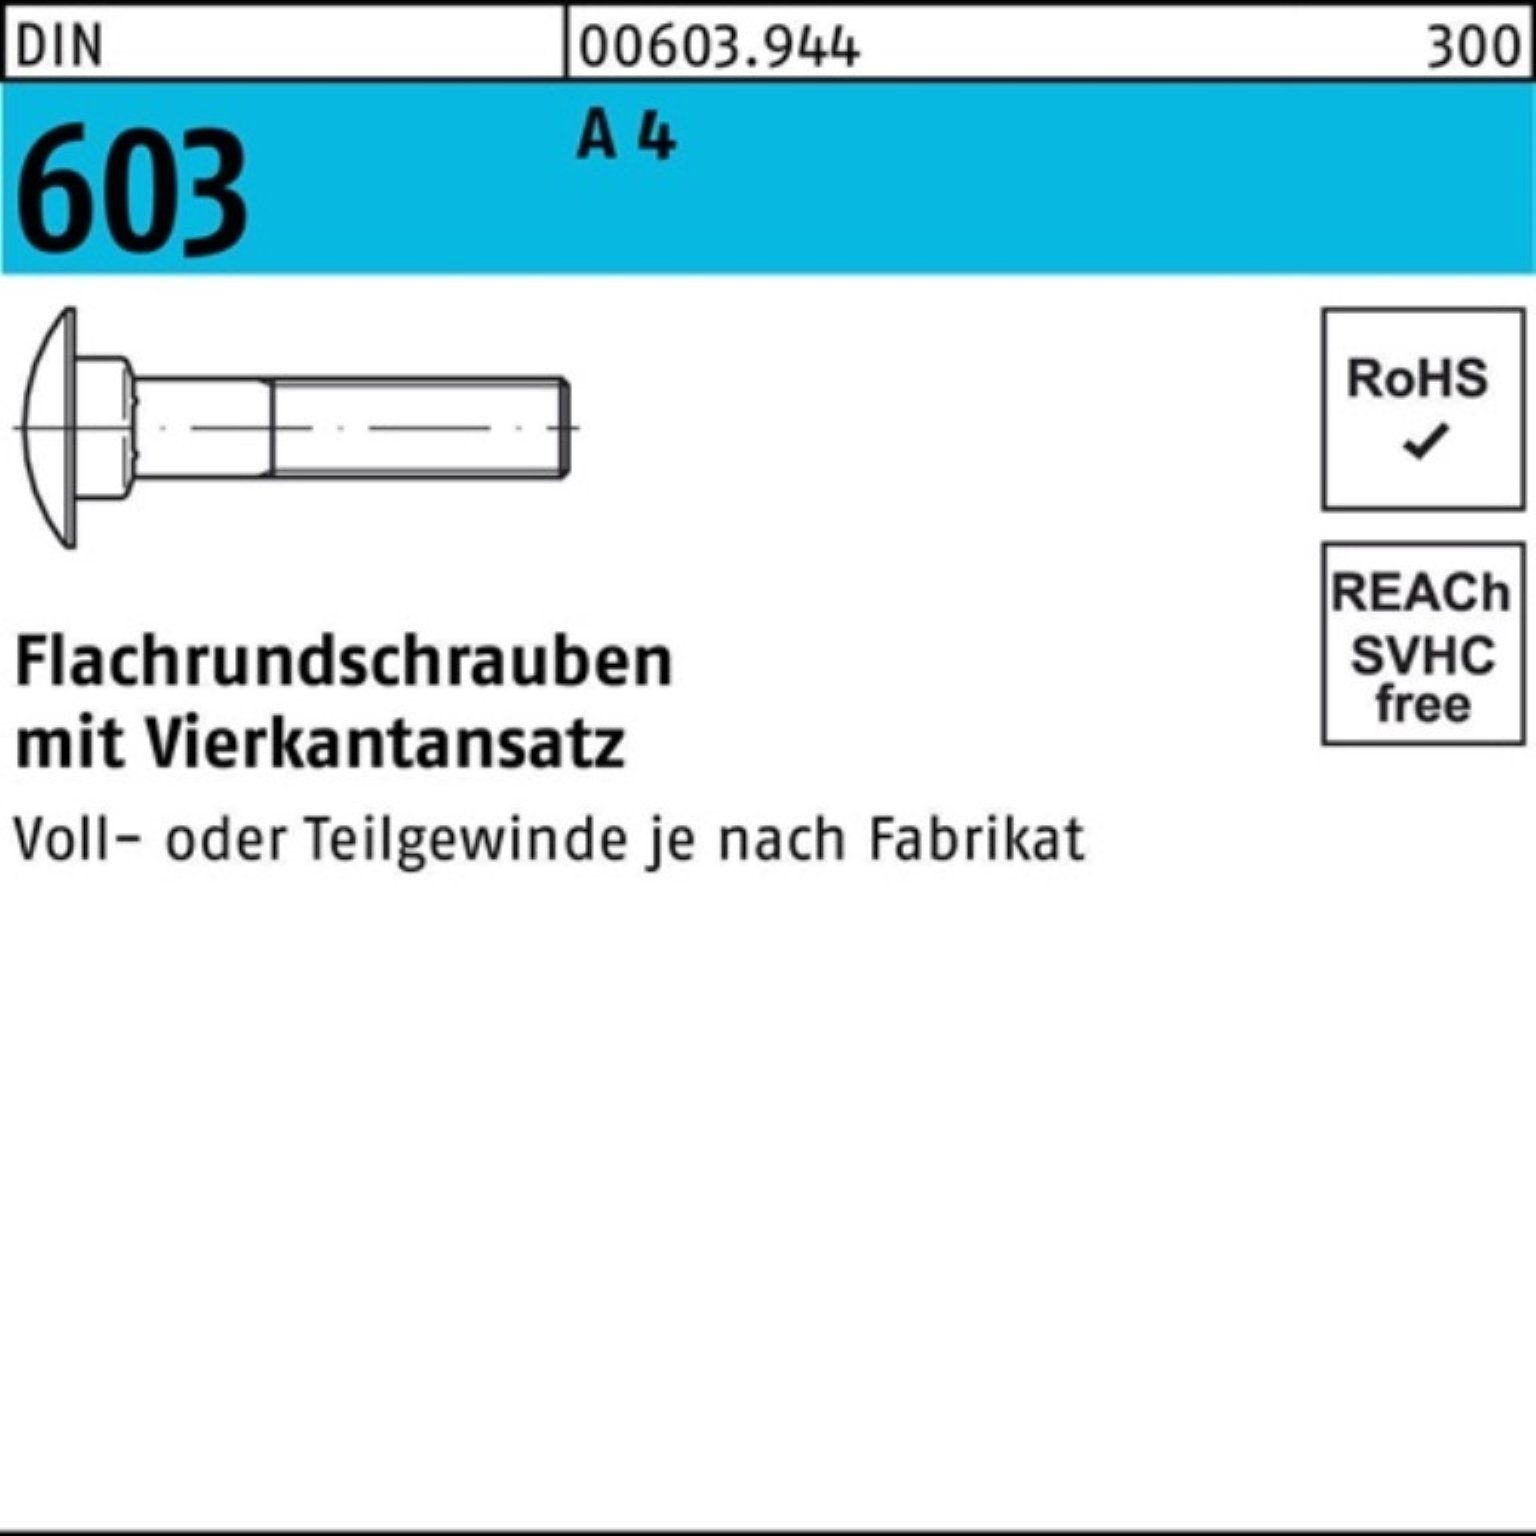 Reyher Schraube 100er Pack Flachrundschraube DIN 603 Vierkantansatz M10x 110 A 4 1 St